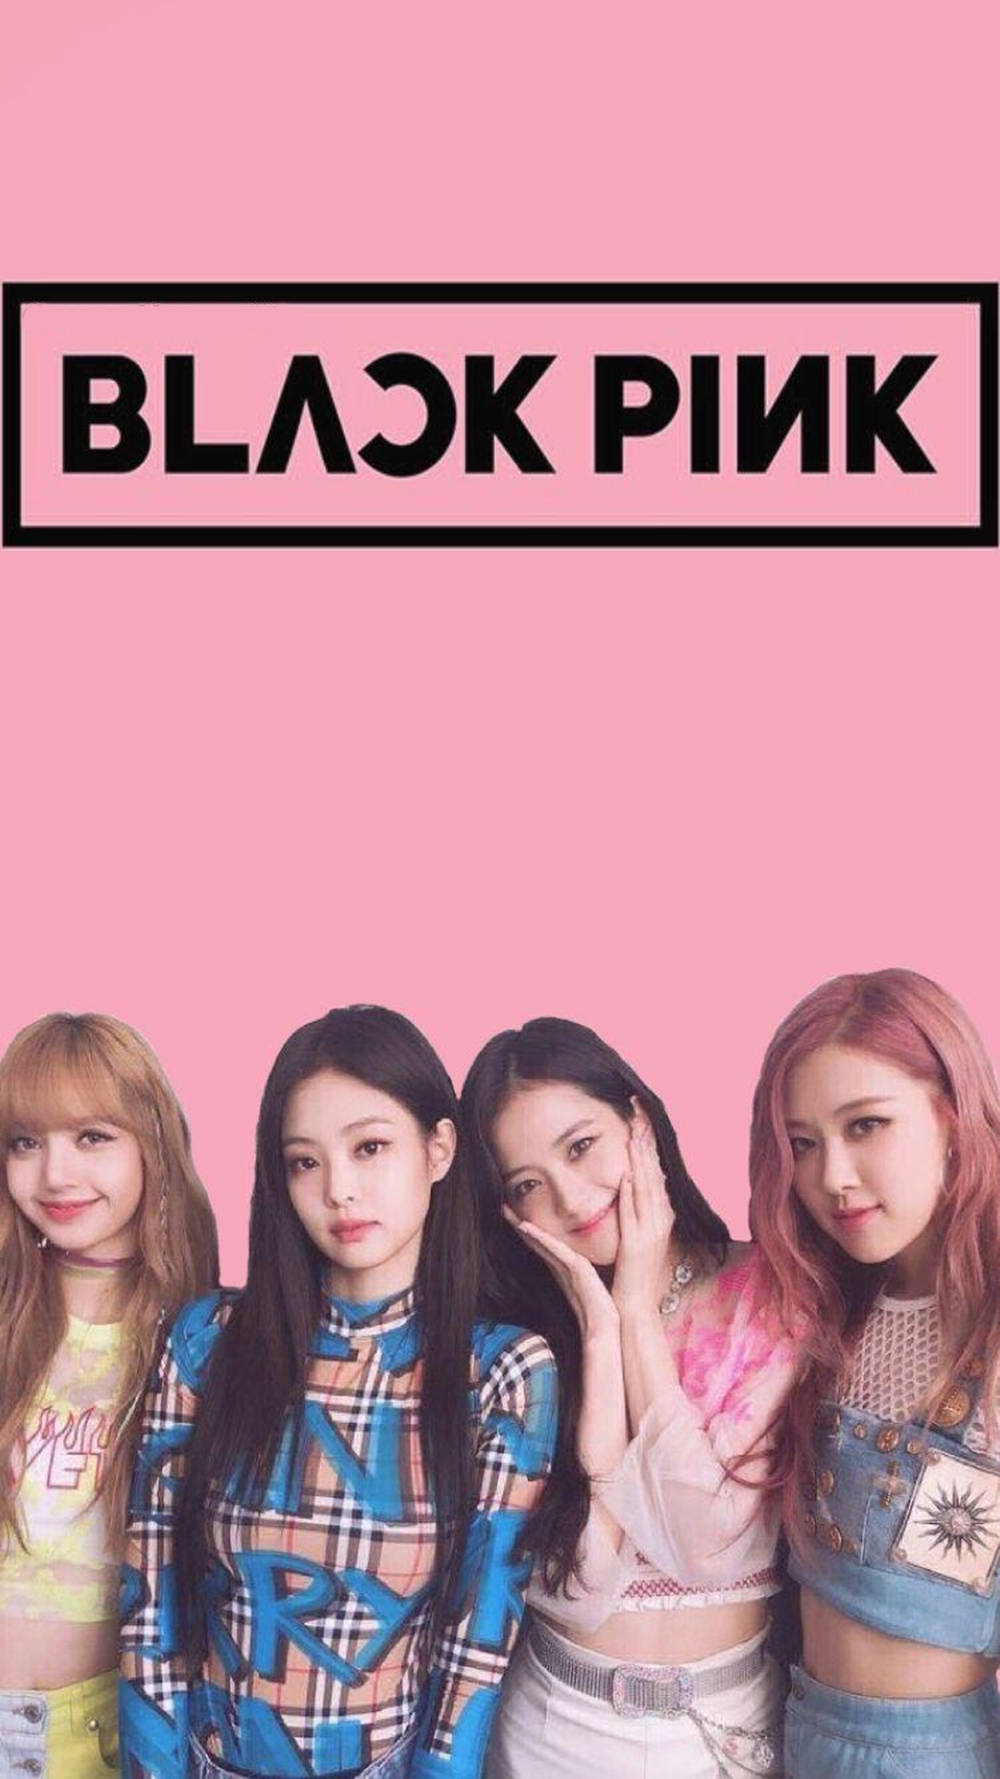 Blackpink Cute Group Photo Wallpaper